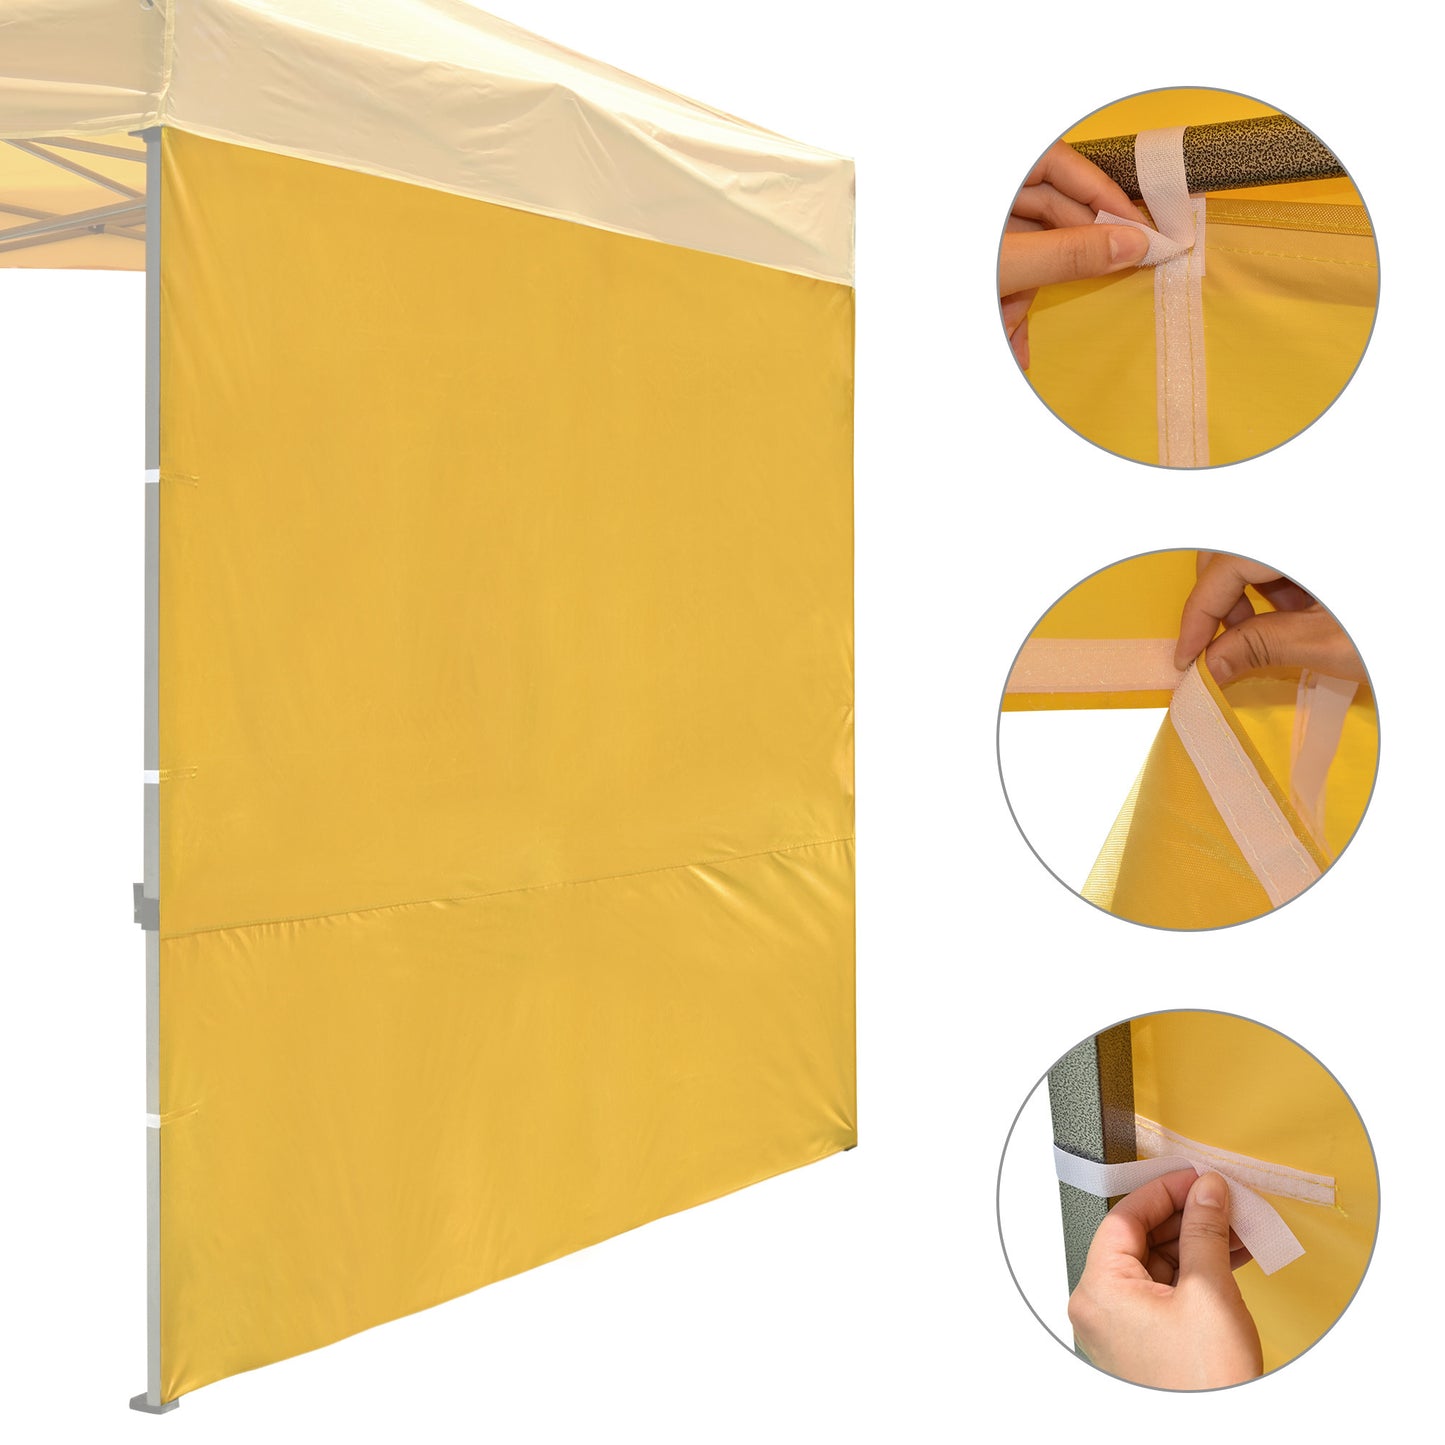 10x10ft EZ Canopy Gazebo Full Size Side Wall/ Mineral Yellow PANTONG 15-1046TPX